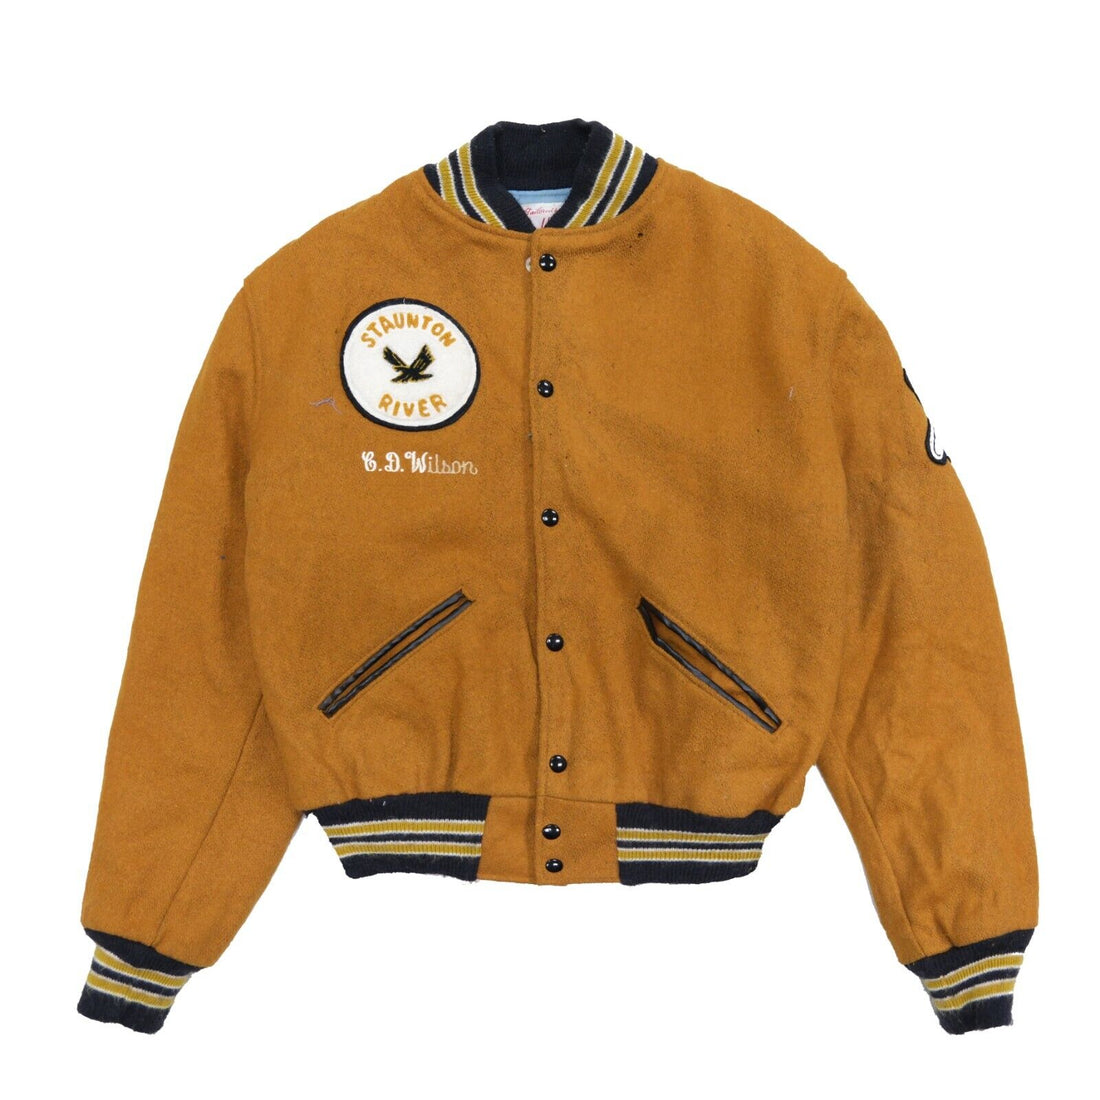 Vintage Staunton River Golden Eagles Wool Varsity Jacket Size Large Tan 80s